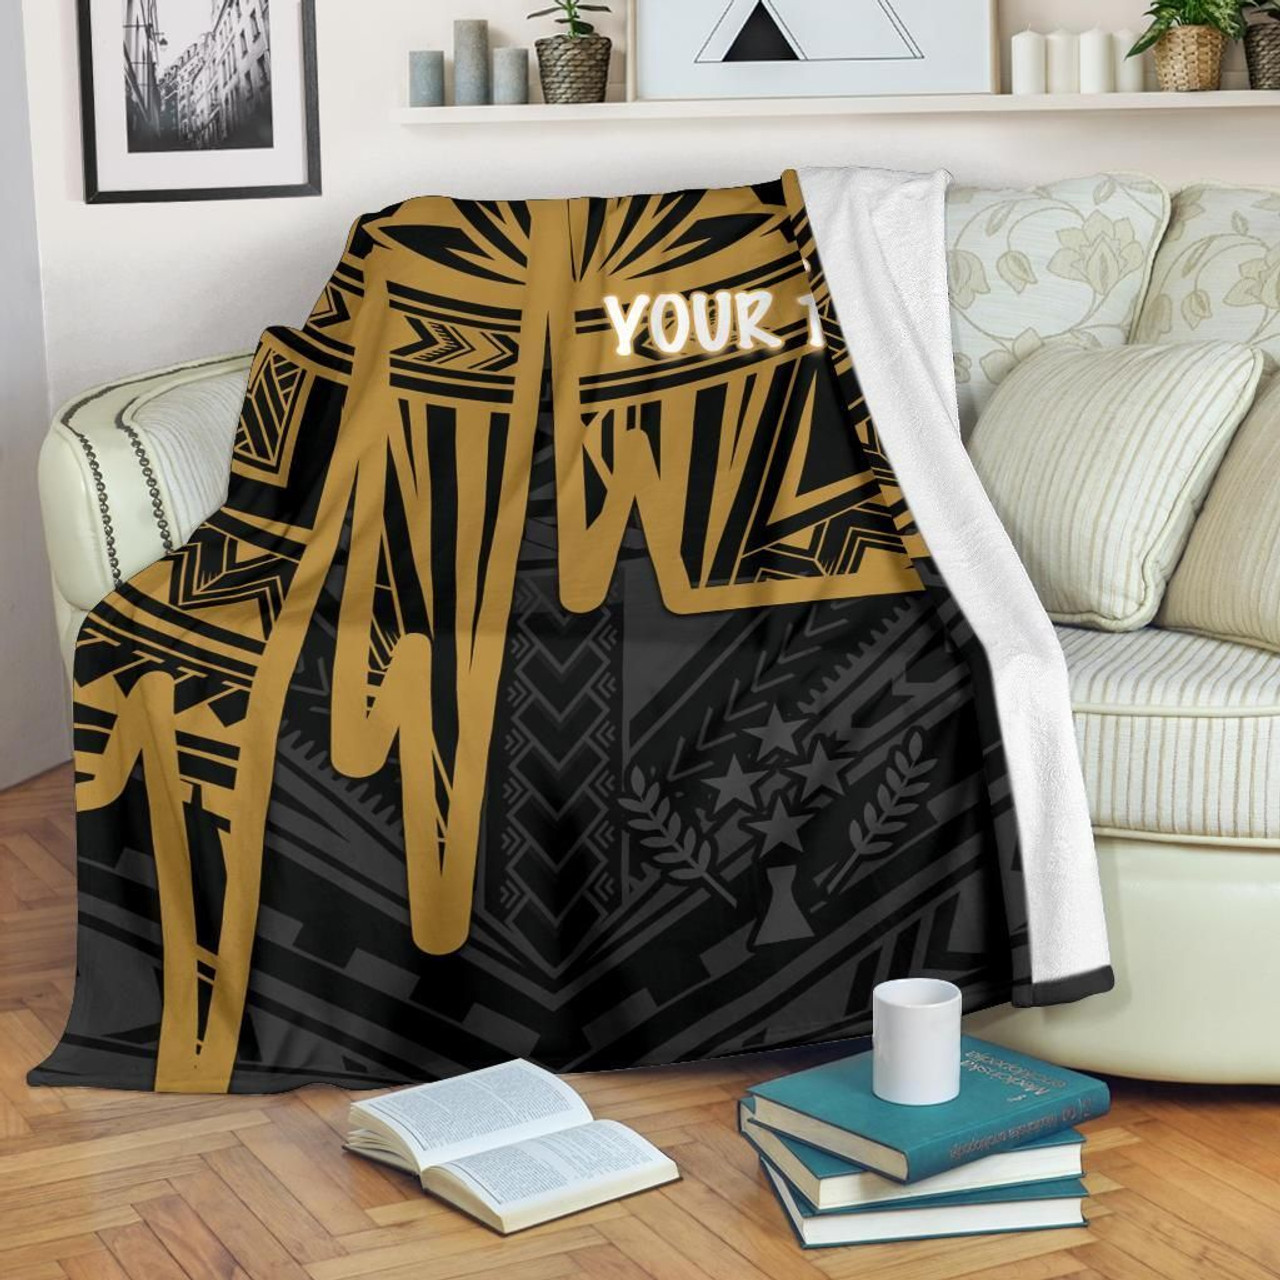 Kosrae Personalised Premium Blanket - Kosrae Seal In Heartbeat Patterns Style (Gold) 4